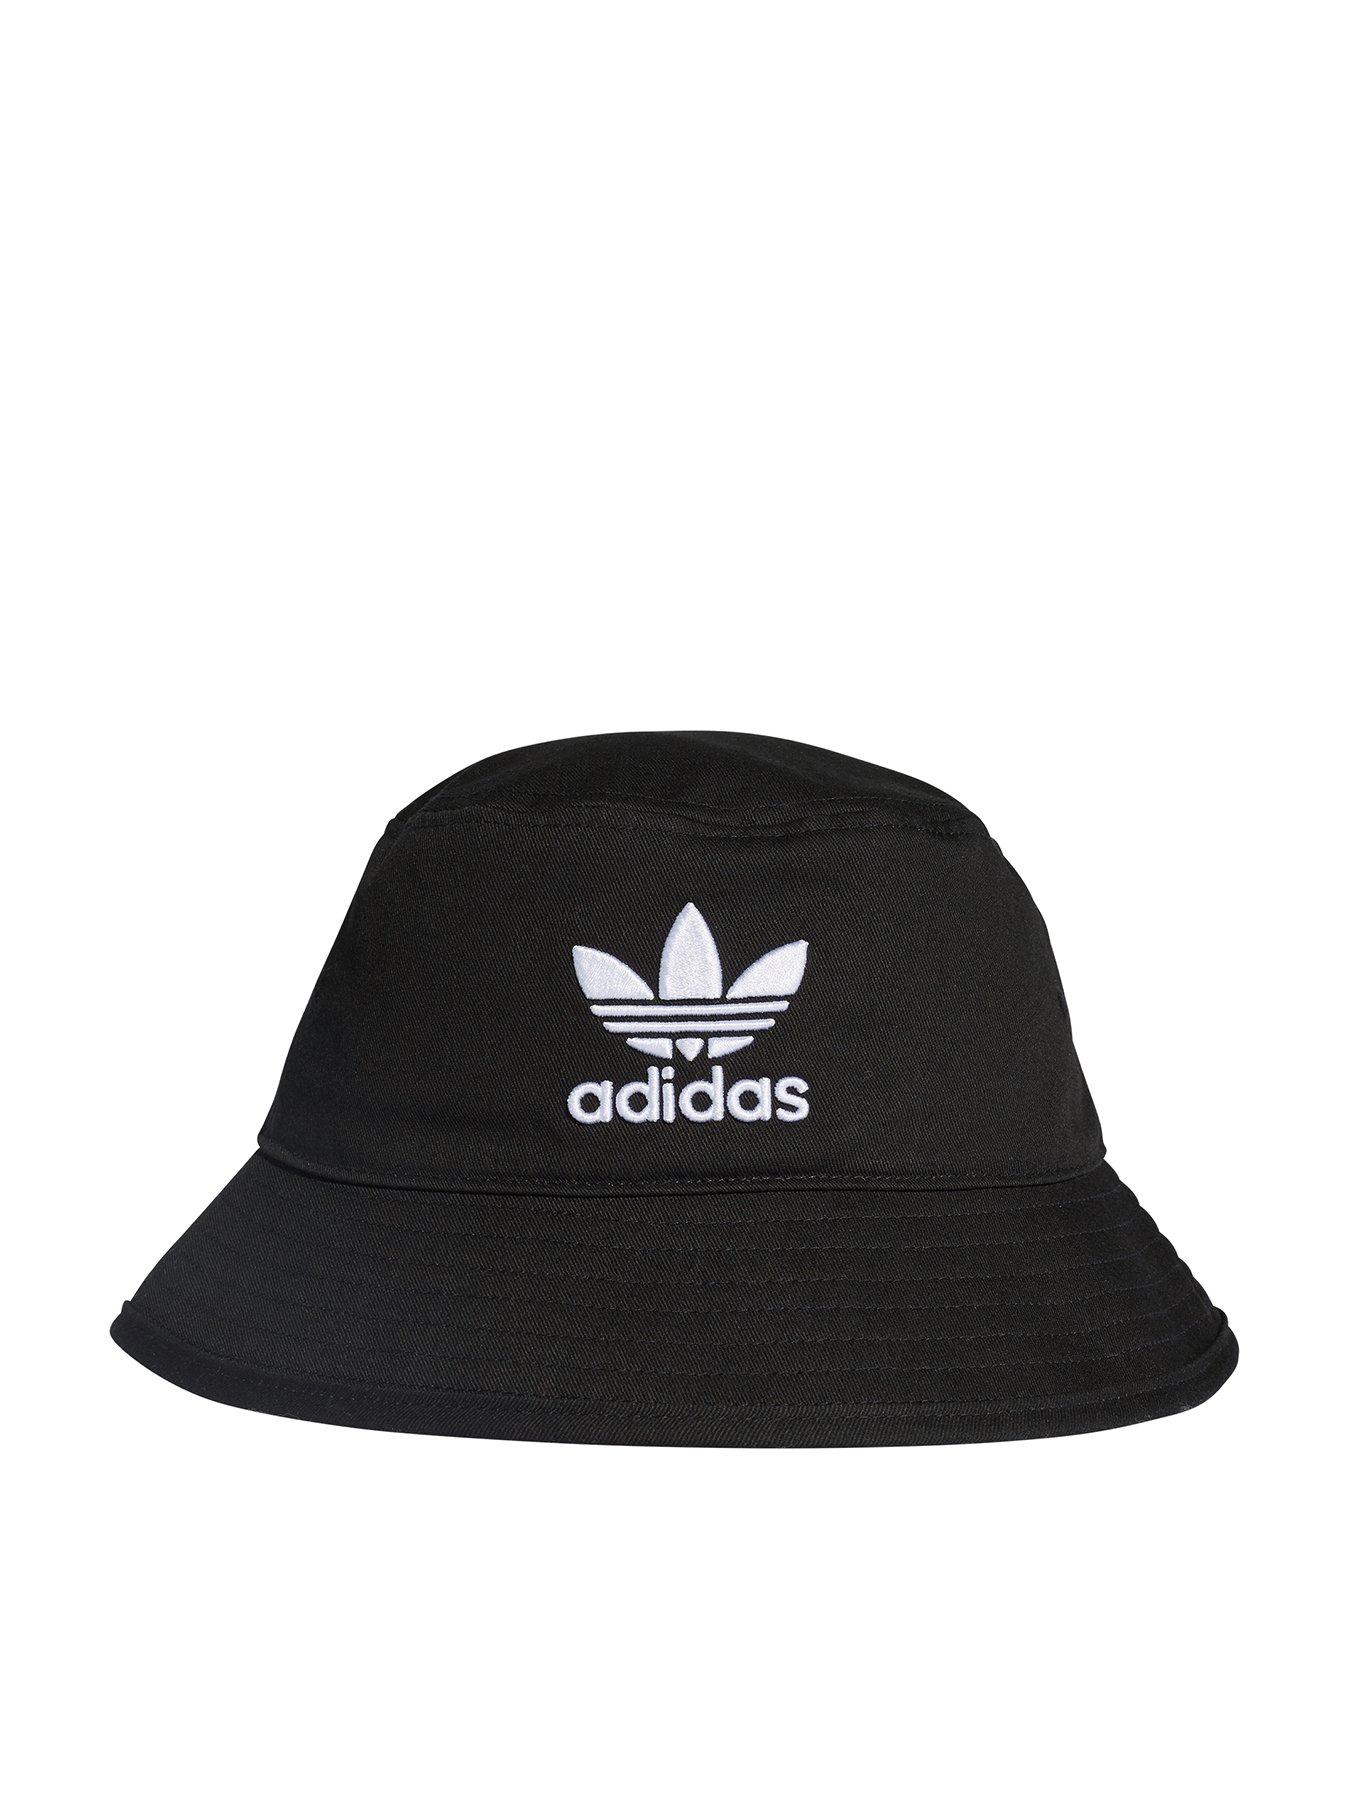 adidas Originals Bucket Hat AC - Black 